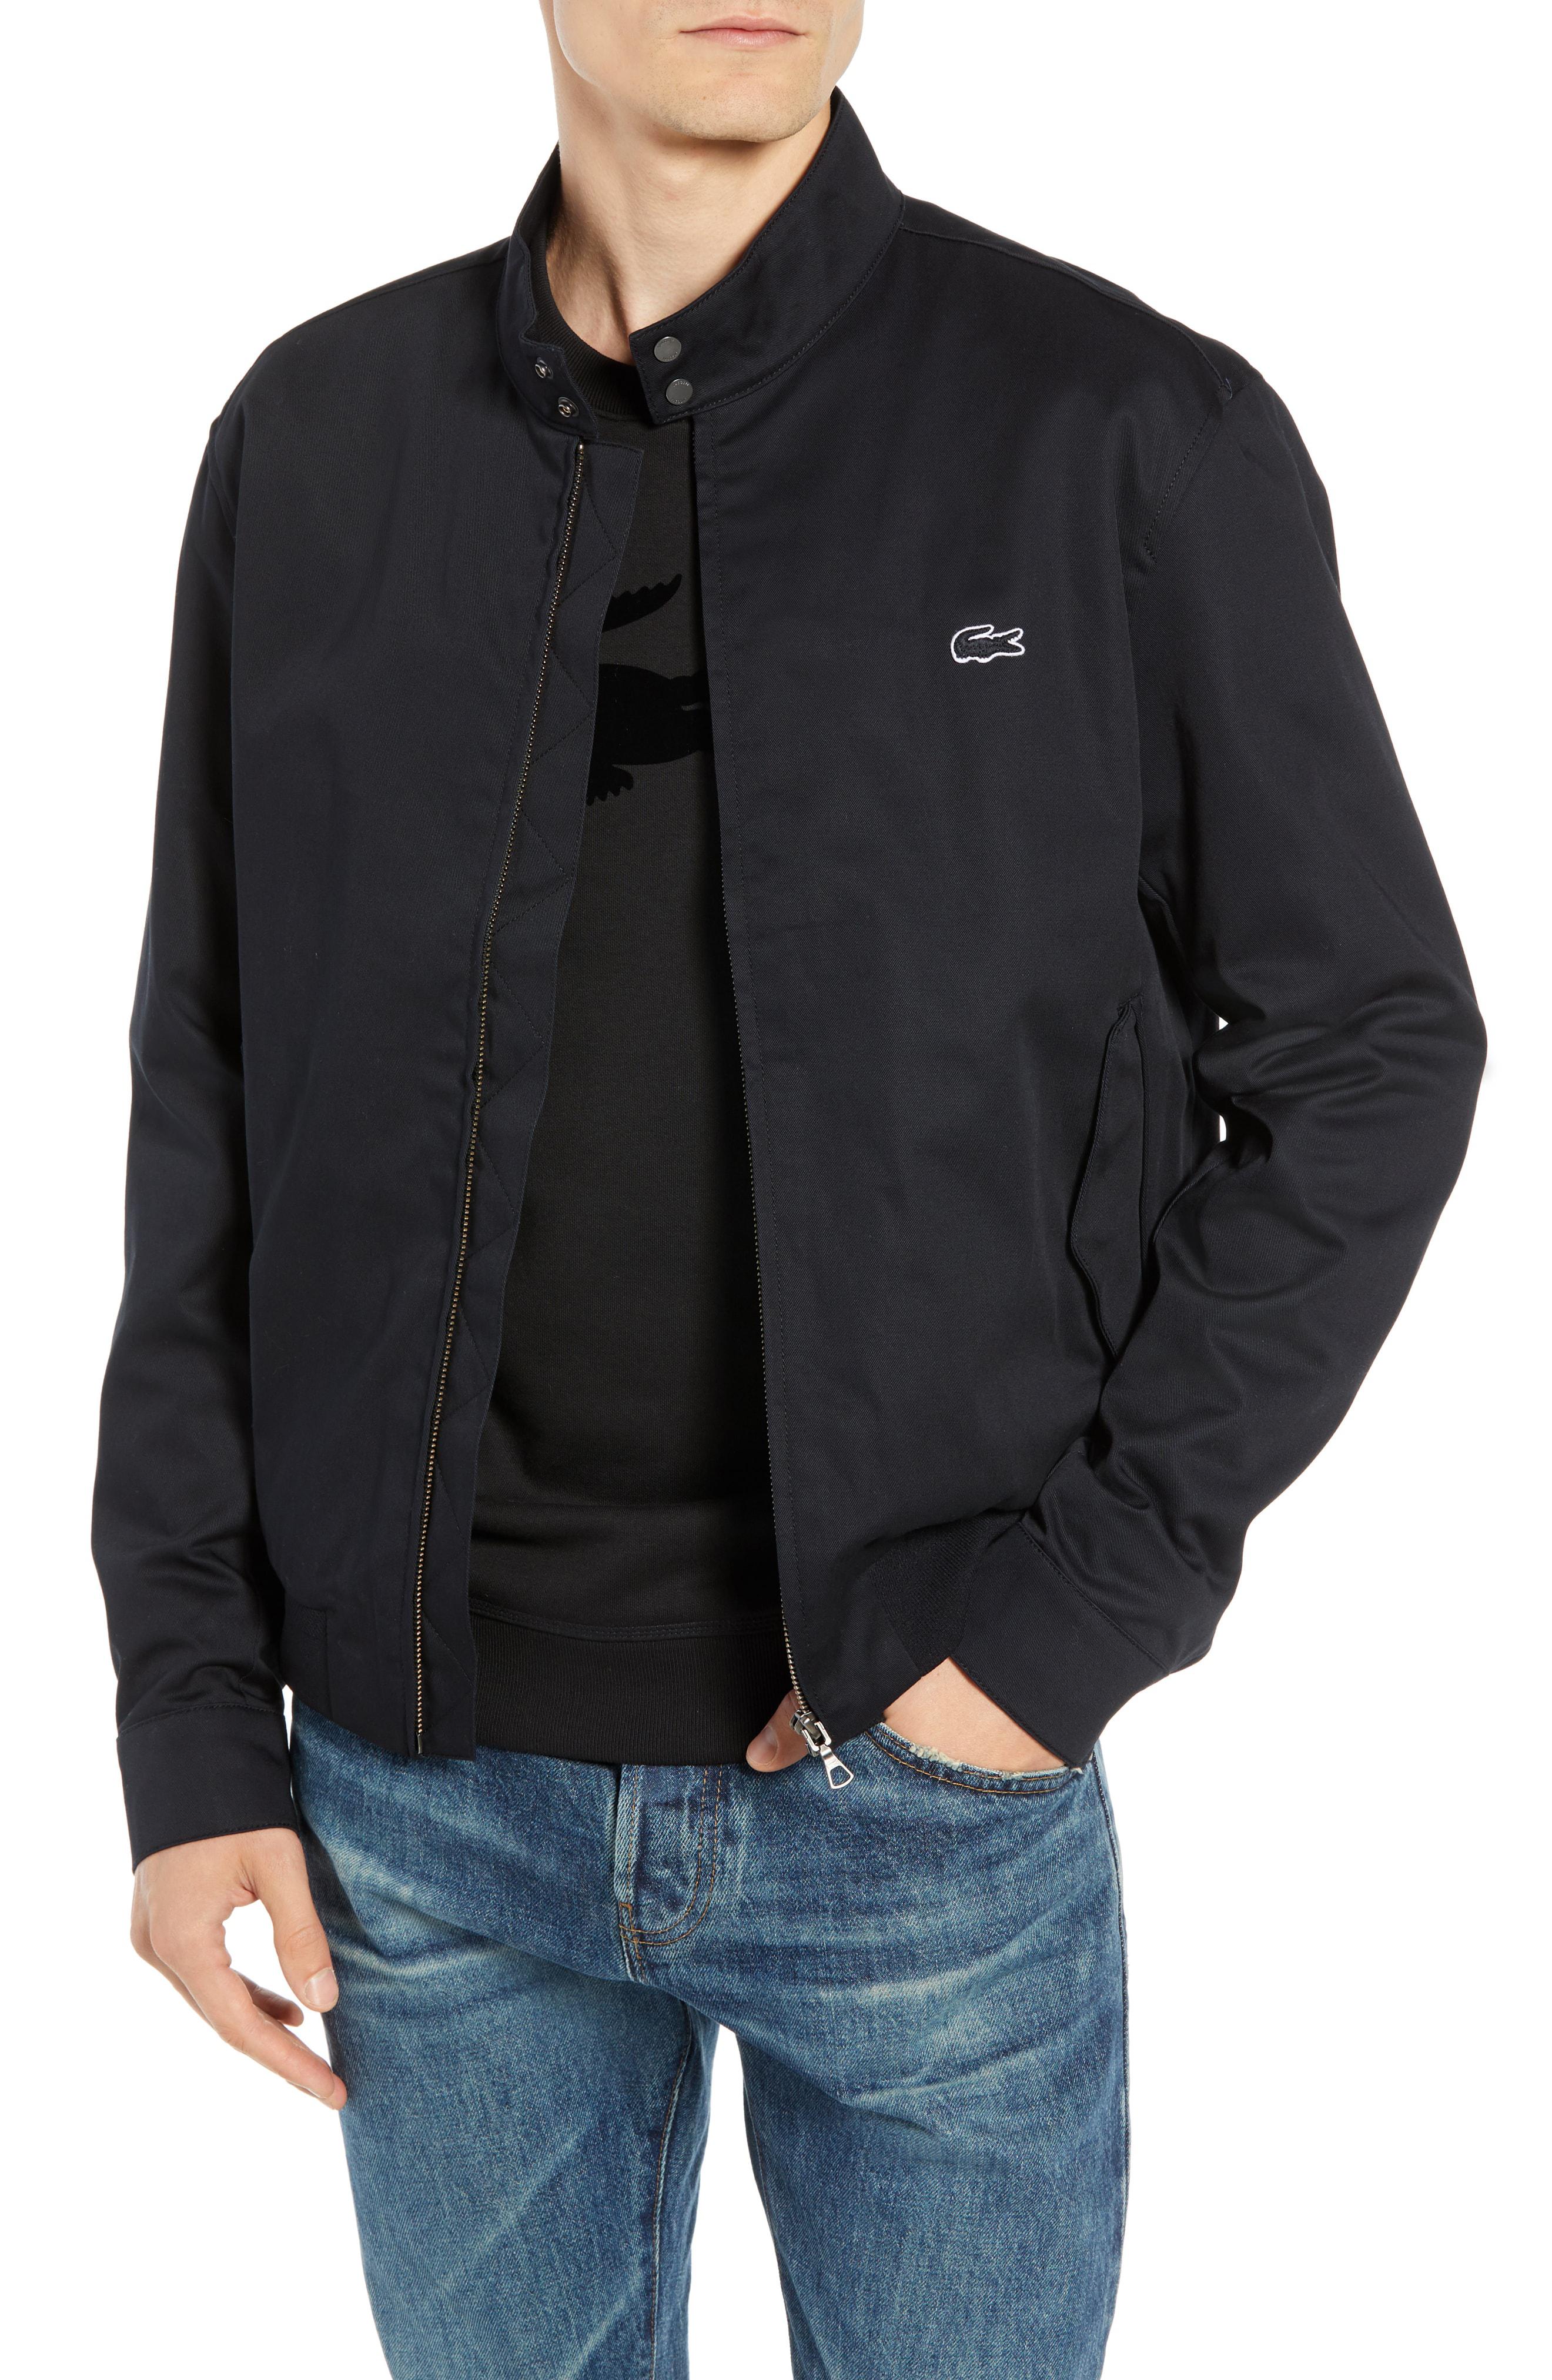 Lacoste Cotton Regular Fit Zip Harrington Jacket in Black for Men - Lyst